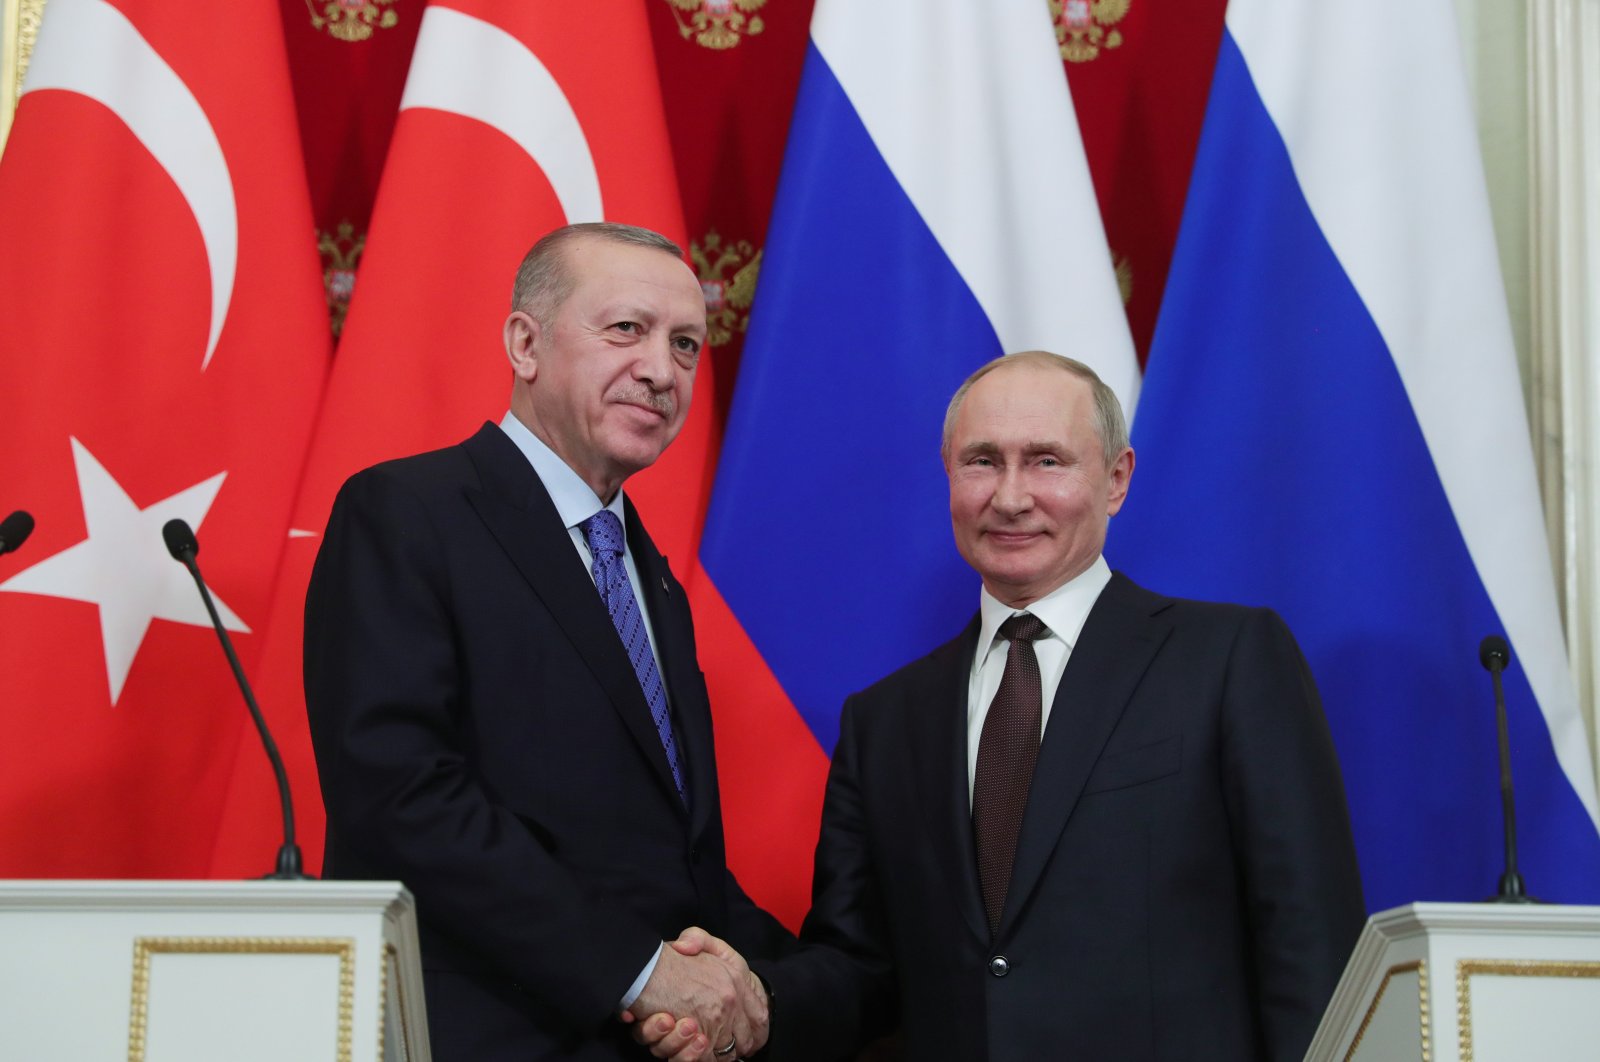 Erdoğan, Putin discuss bilateral ties, pandemic, region